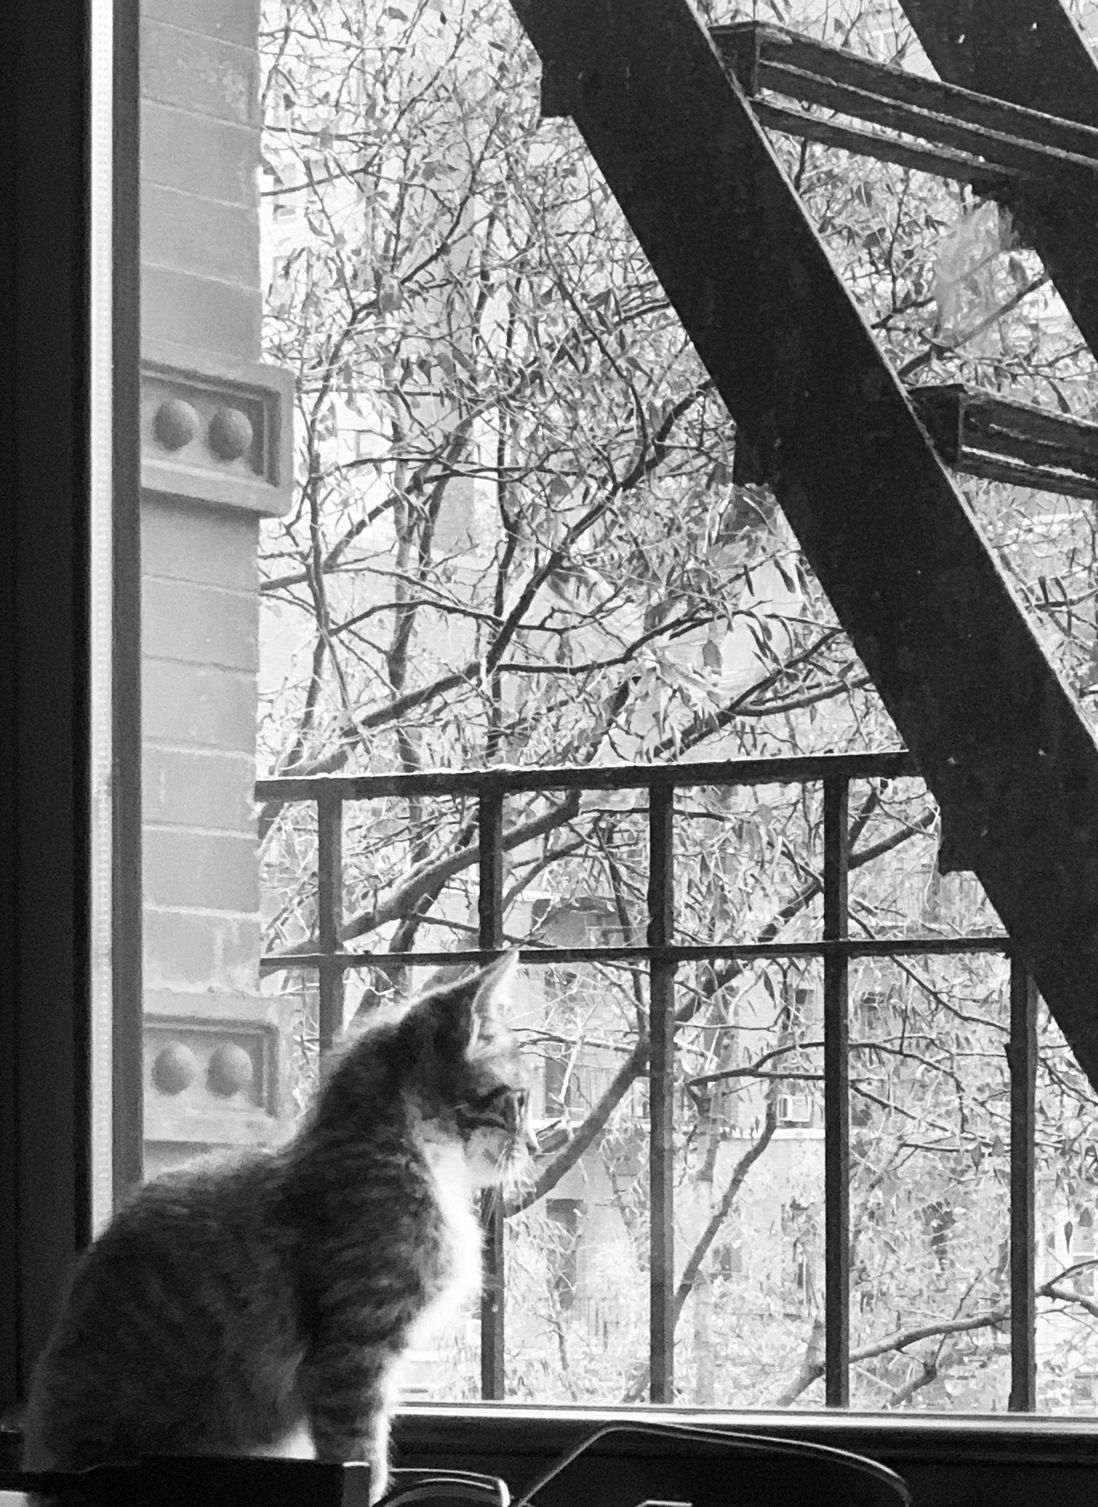 Franklin looks outside a window that has a fire escape